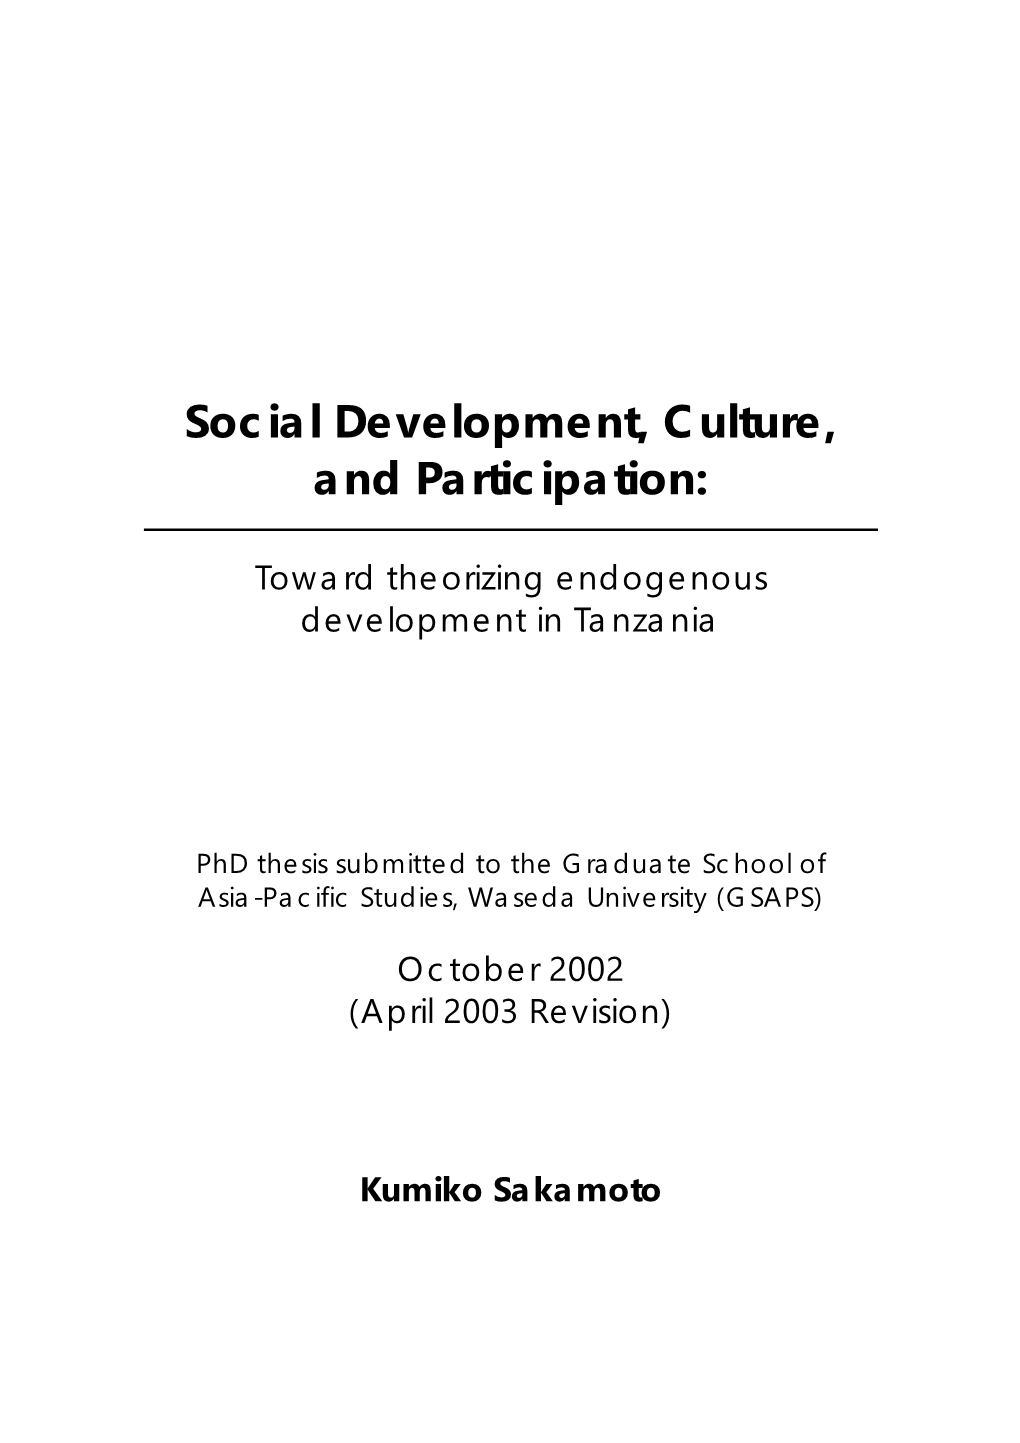 Social Development, Culture, and Participation